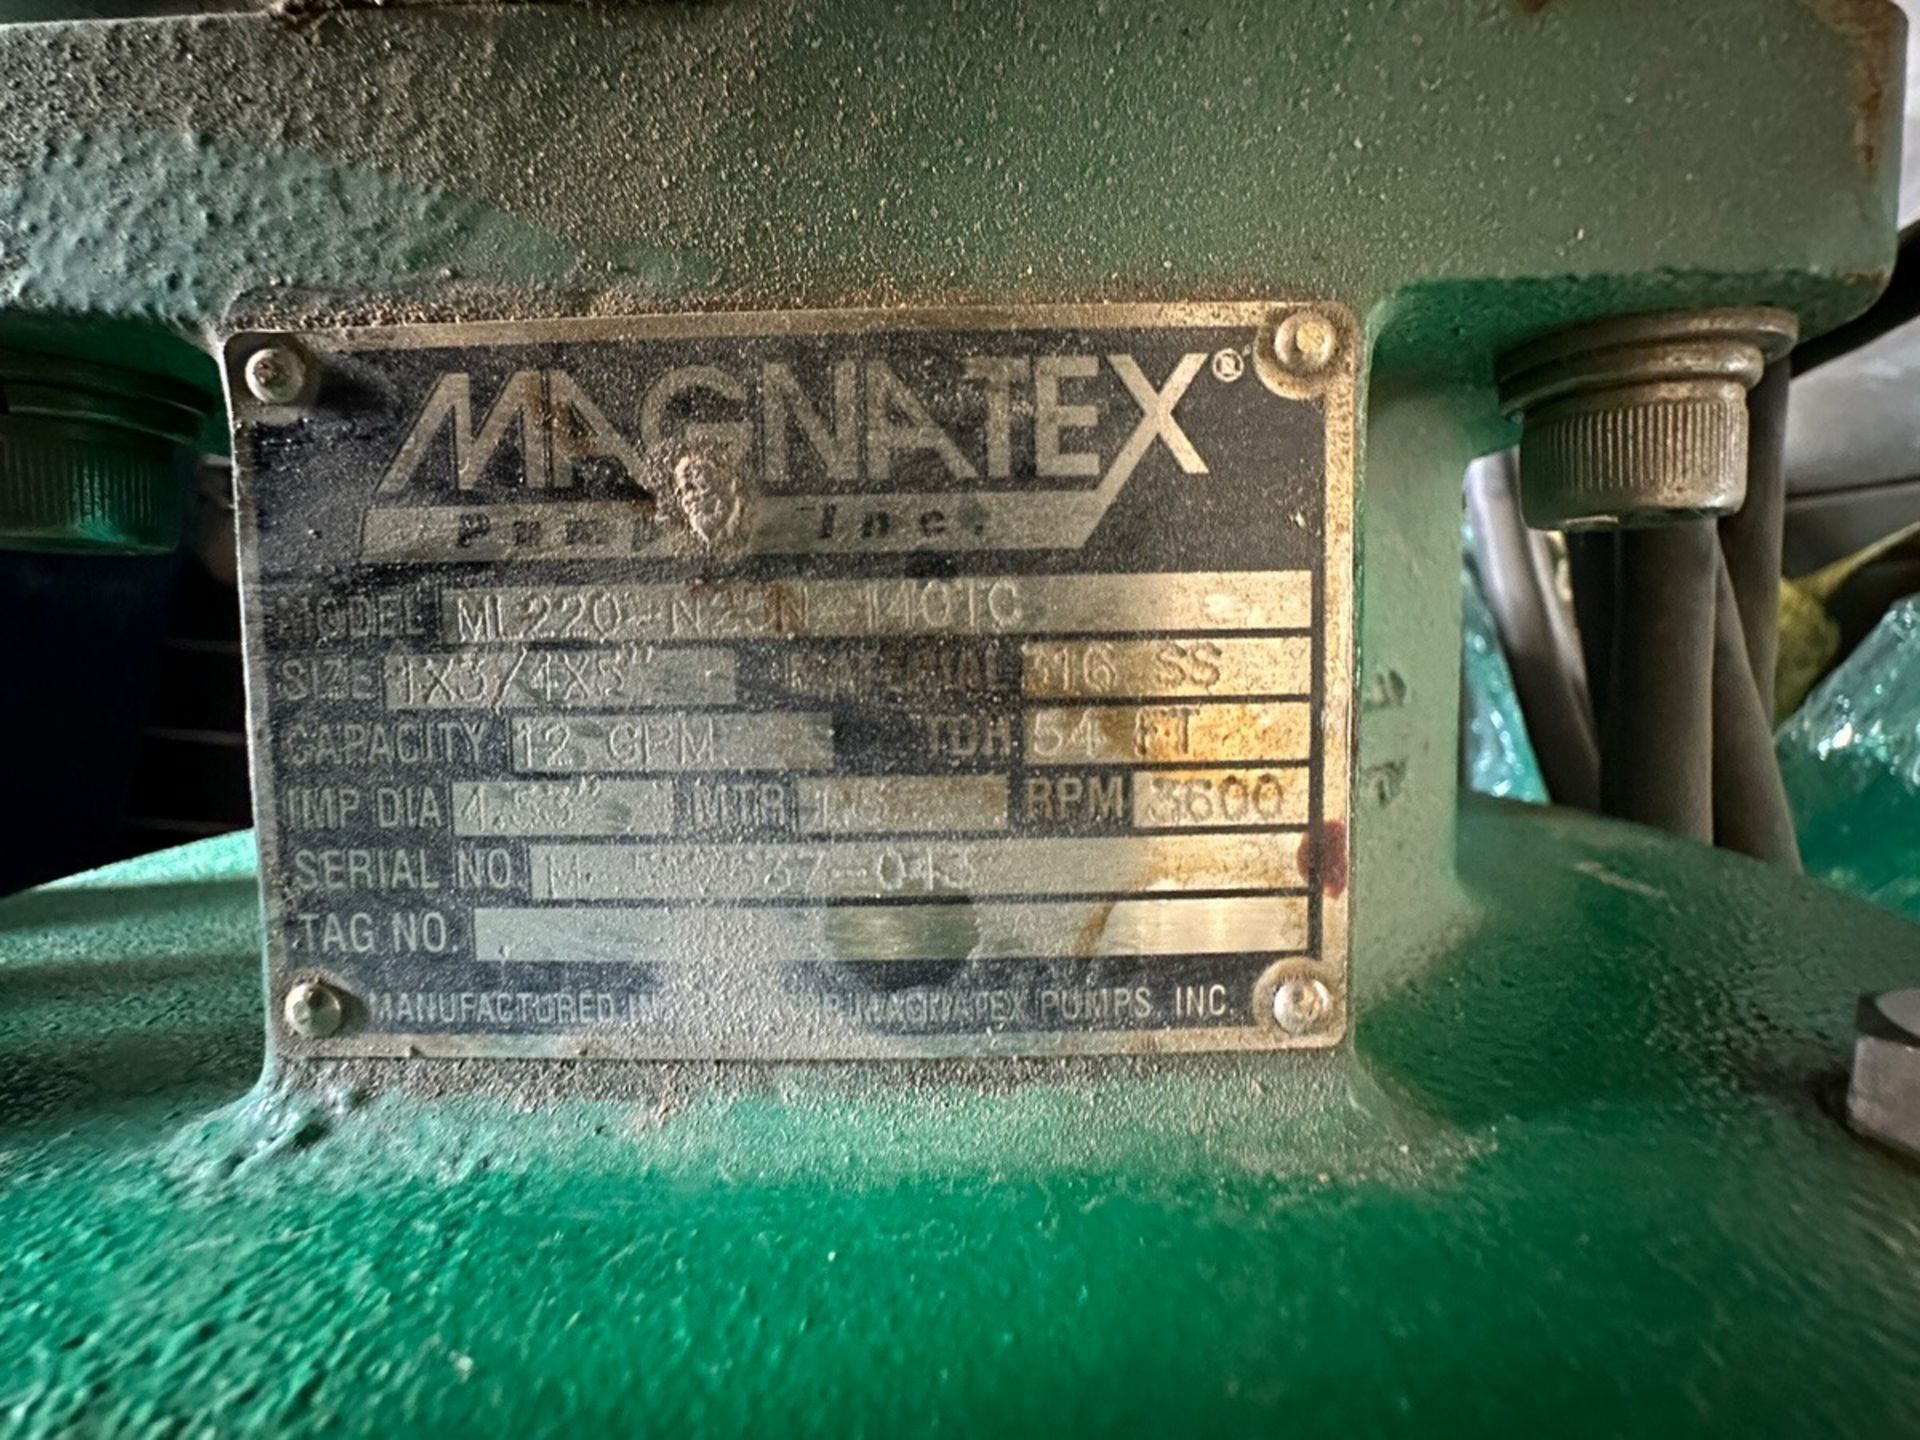 Magnatex, Pumps, Centrifugal Pump, Model ML 220 N25N-140TC | Rig Fee $35 - Image 3 of 3